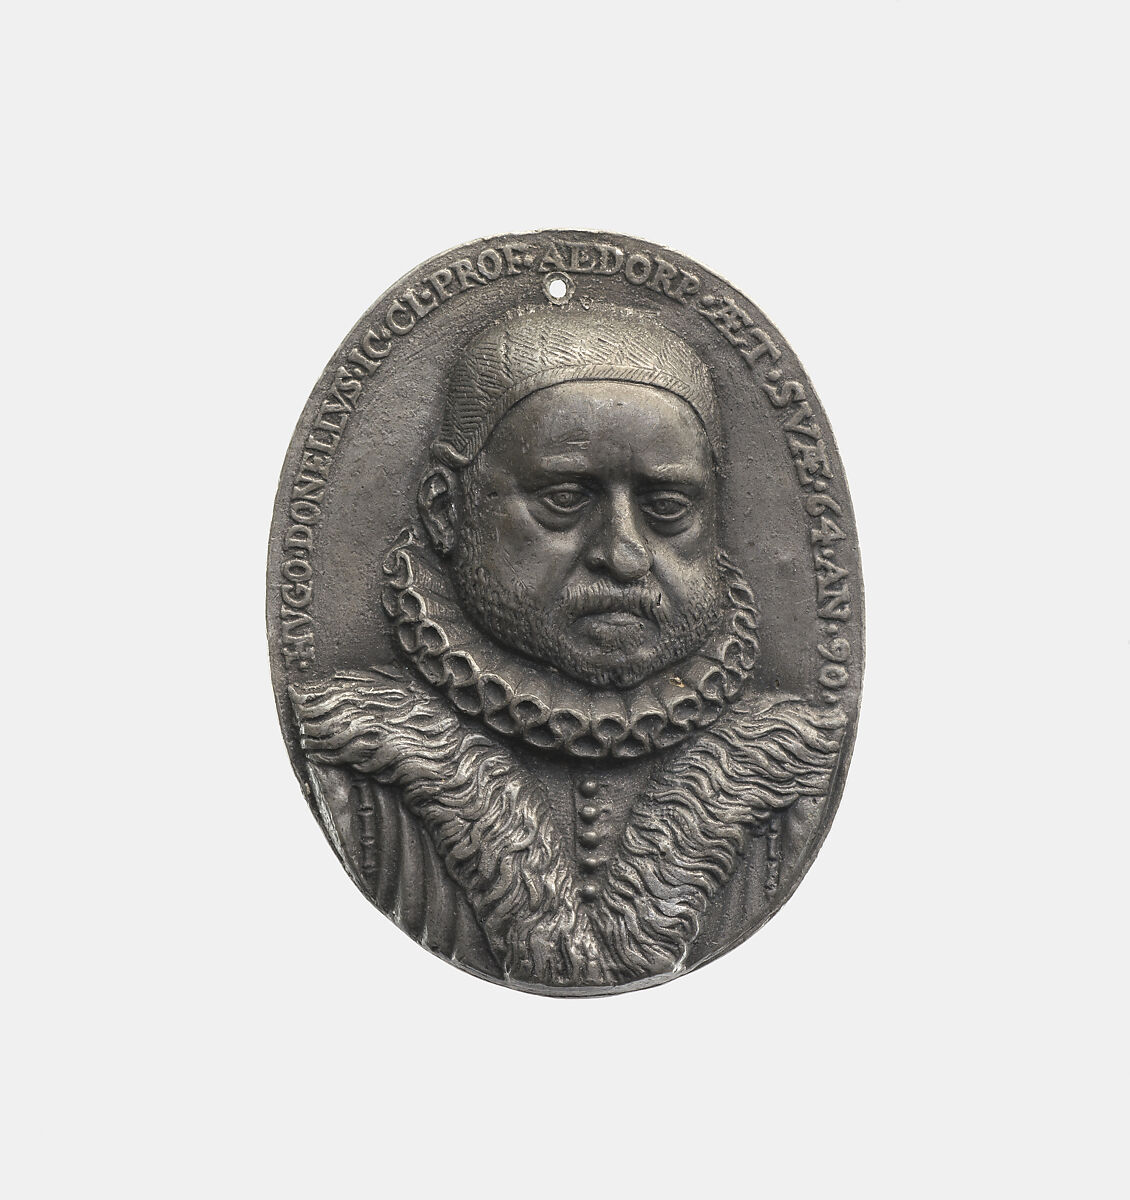 Hugo Donellus (Doneau) 1527-91, famed law scholar, School of Georg Holdermann (ca. 1585–1629), Lead, German, Nuremberg 